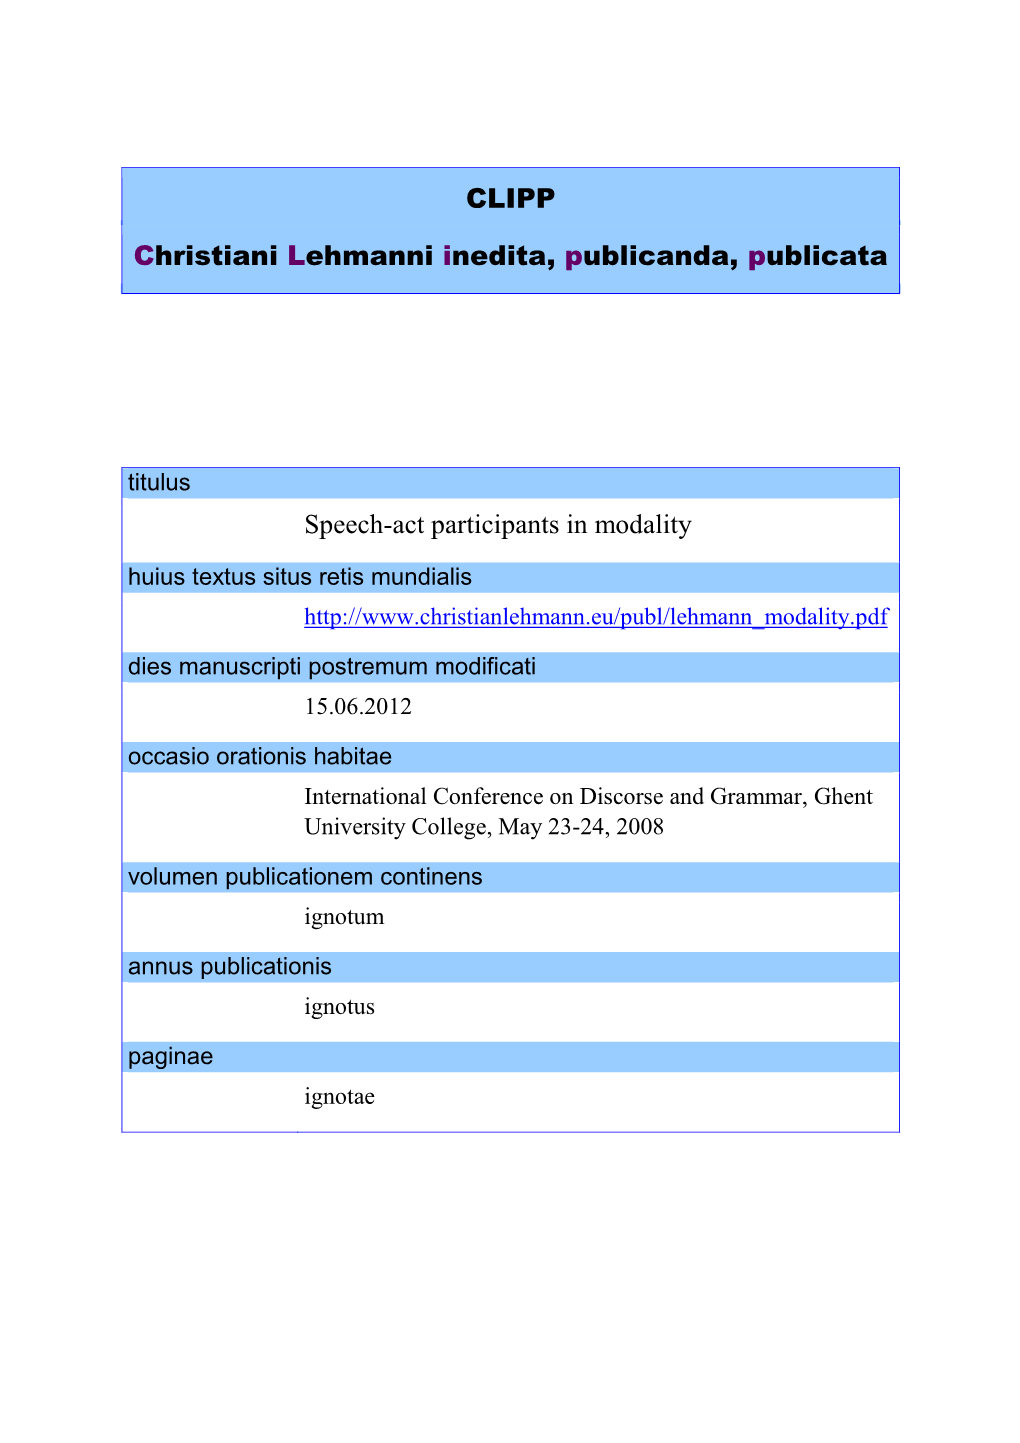 CLIPP Christiani Lehmanni Inedita, Publicanda, Publicata Speech-Act